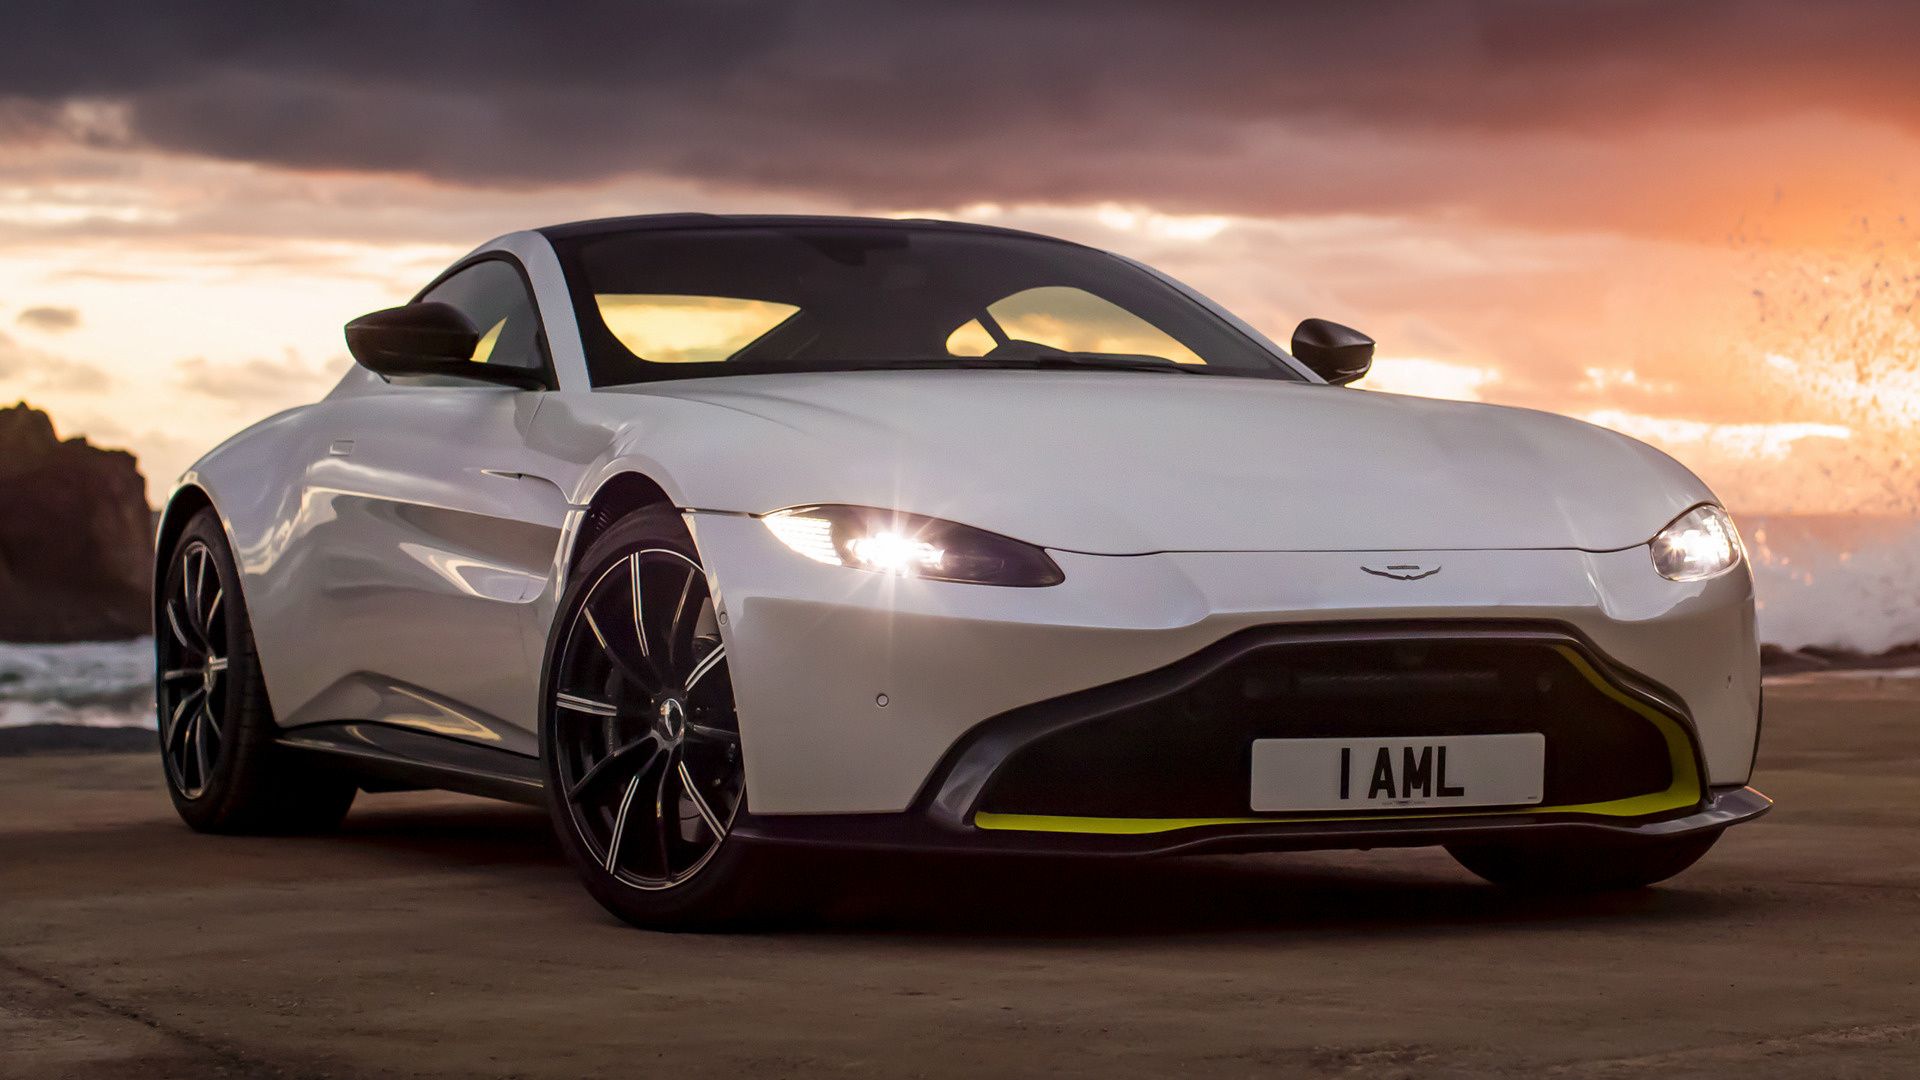 Aston Martin Vantage and HD Image